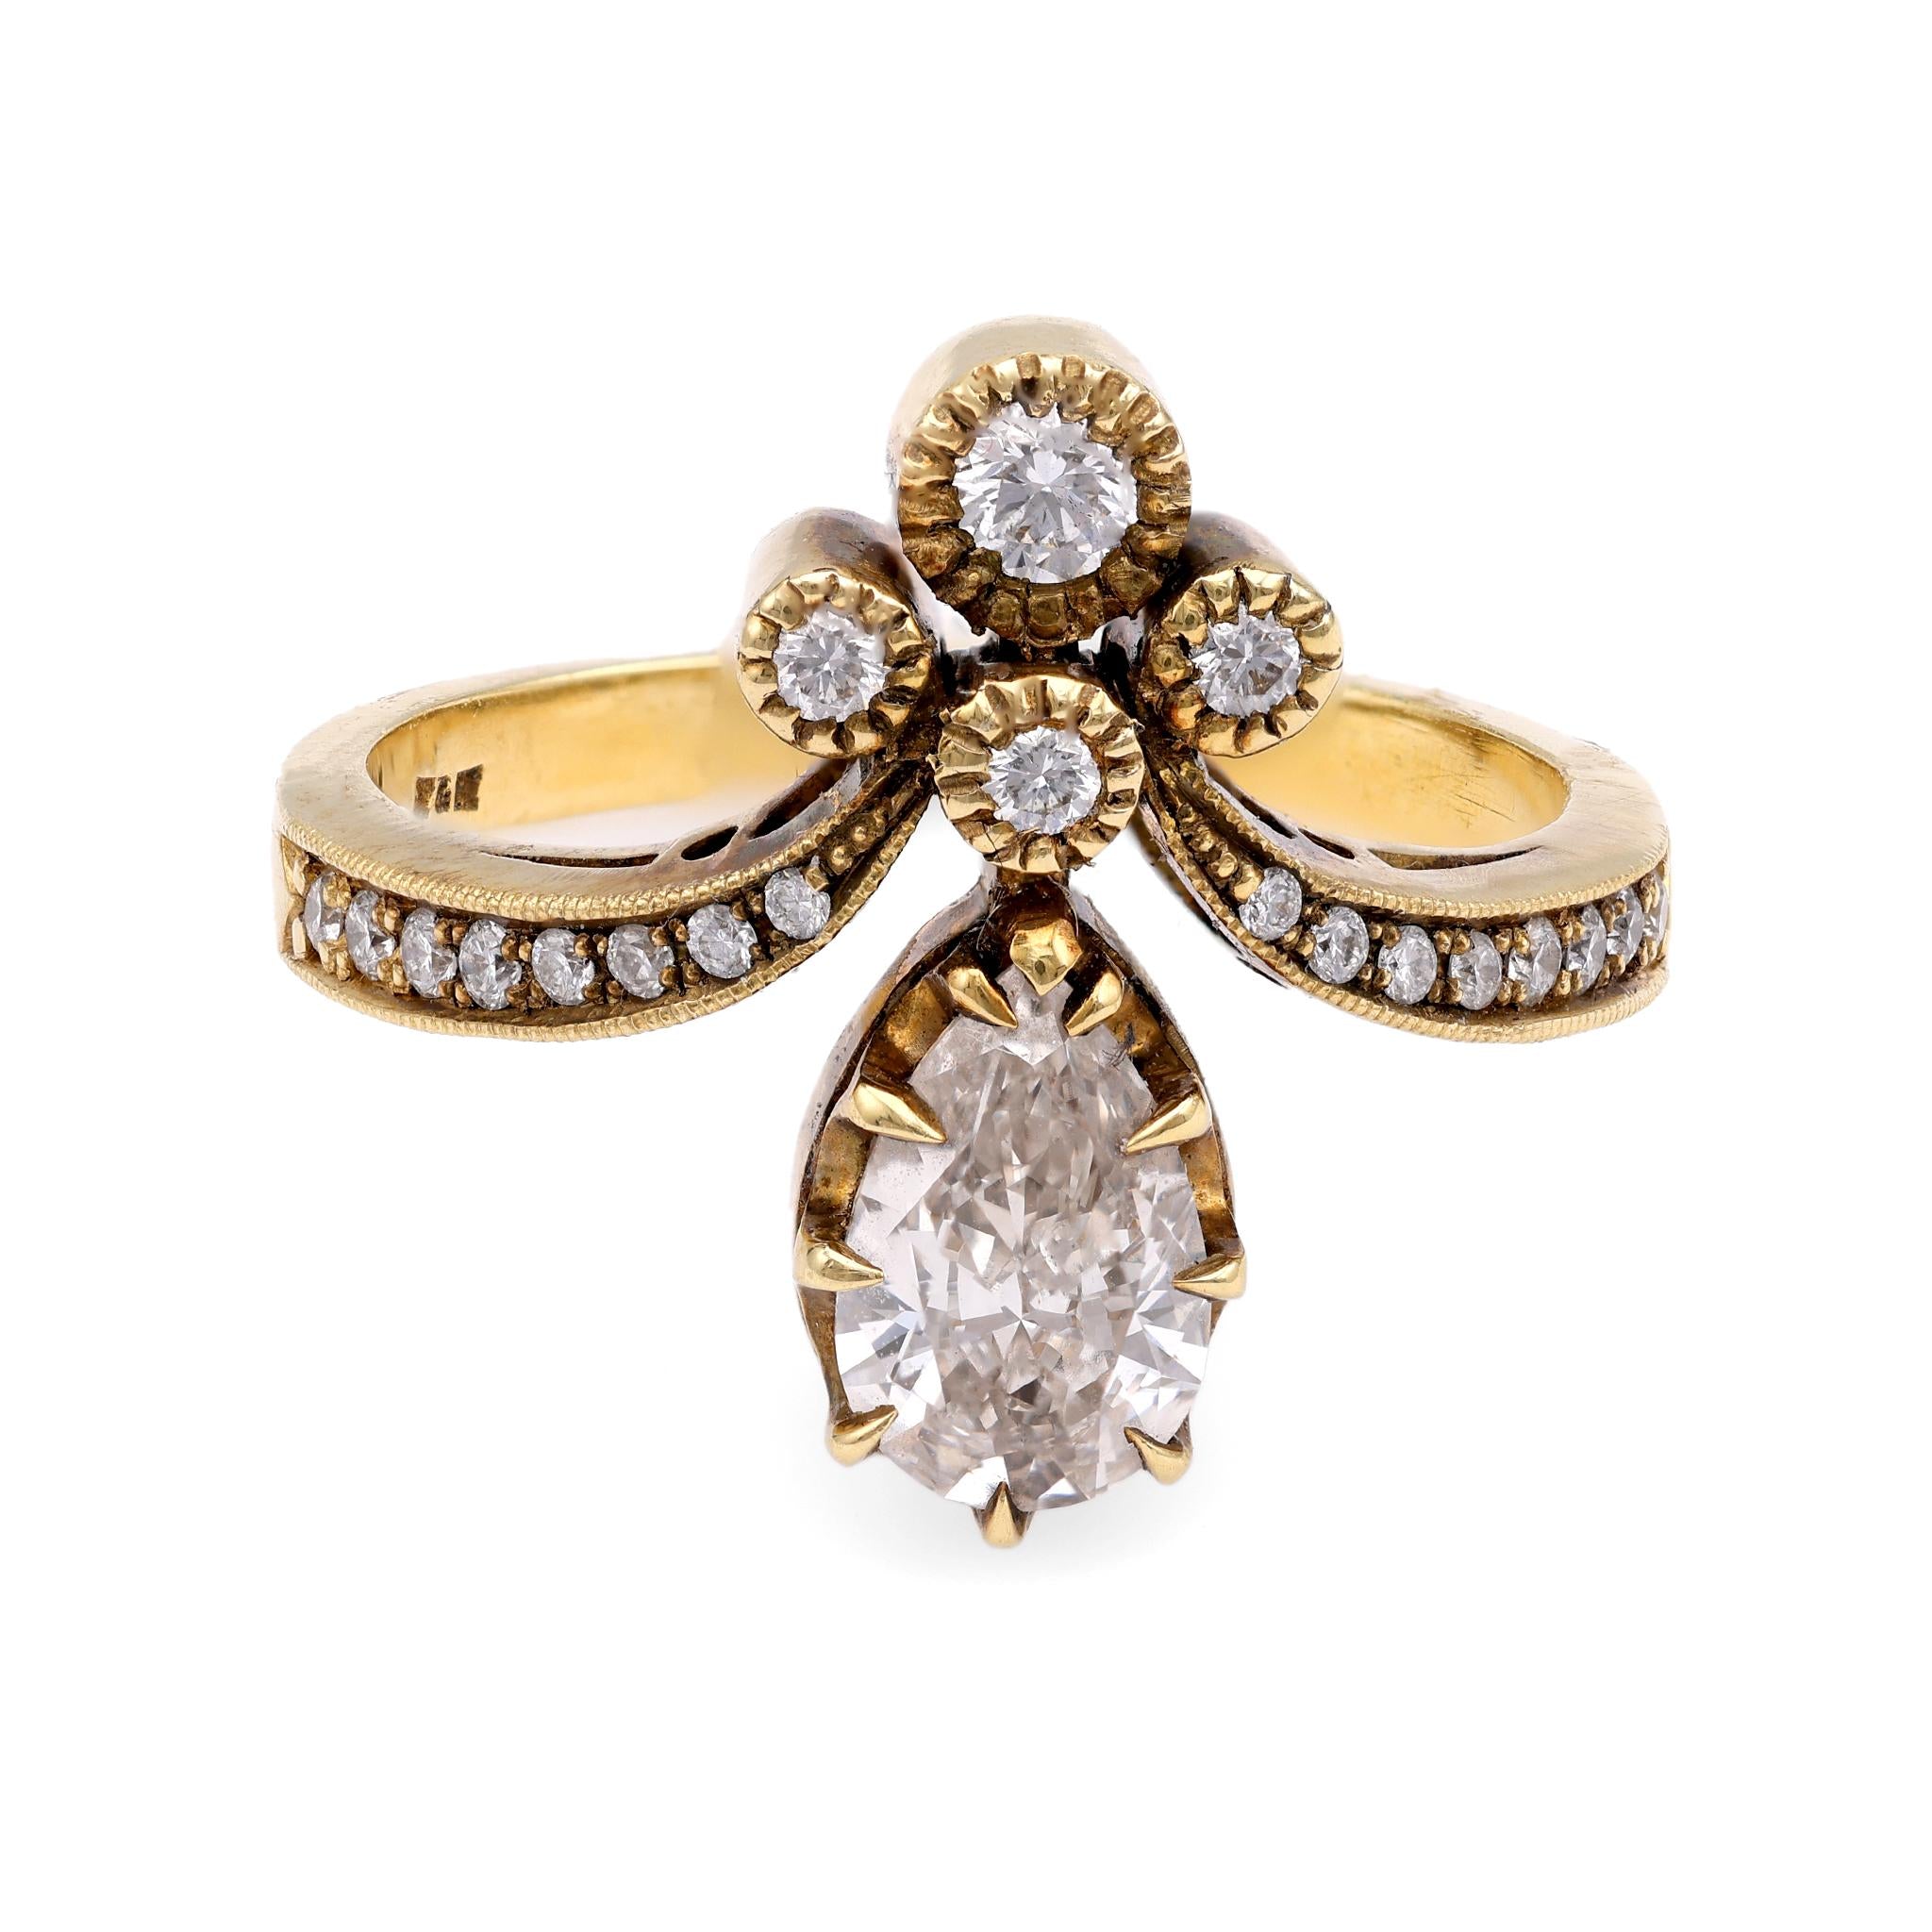 Tiara Ring with Pear Shaped Diamond